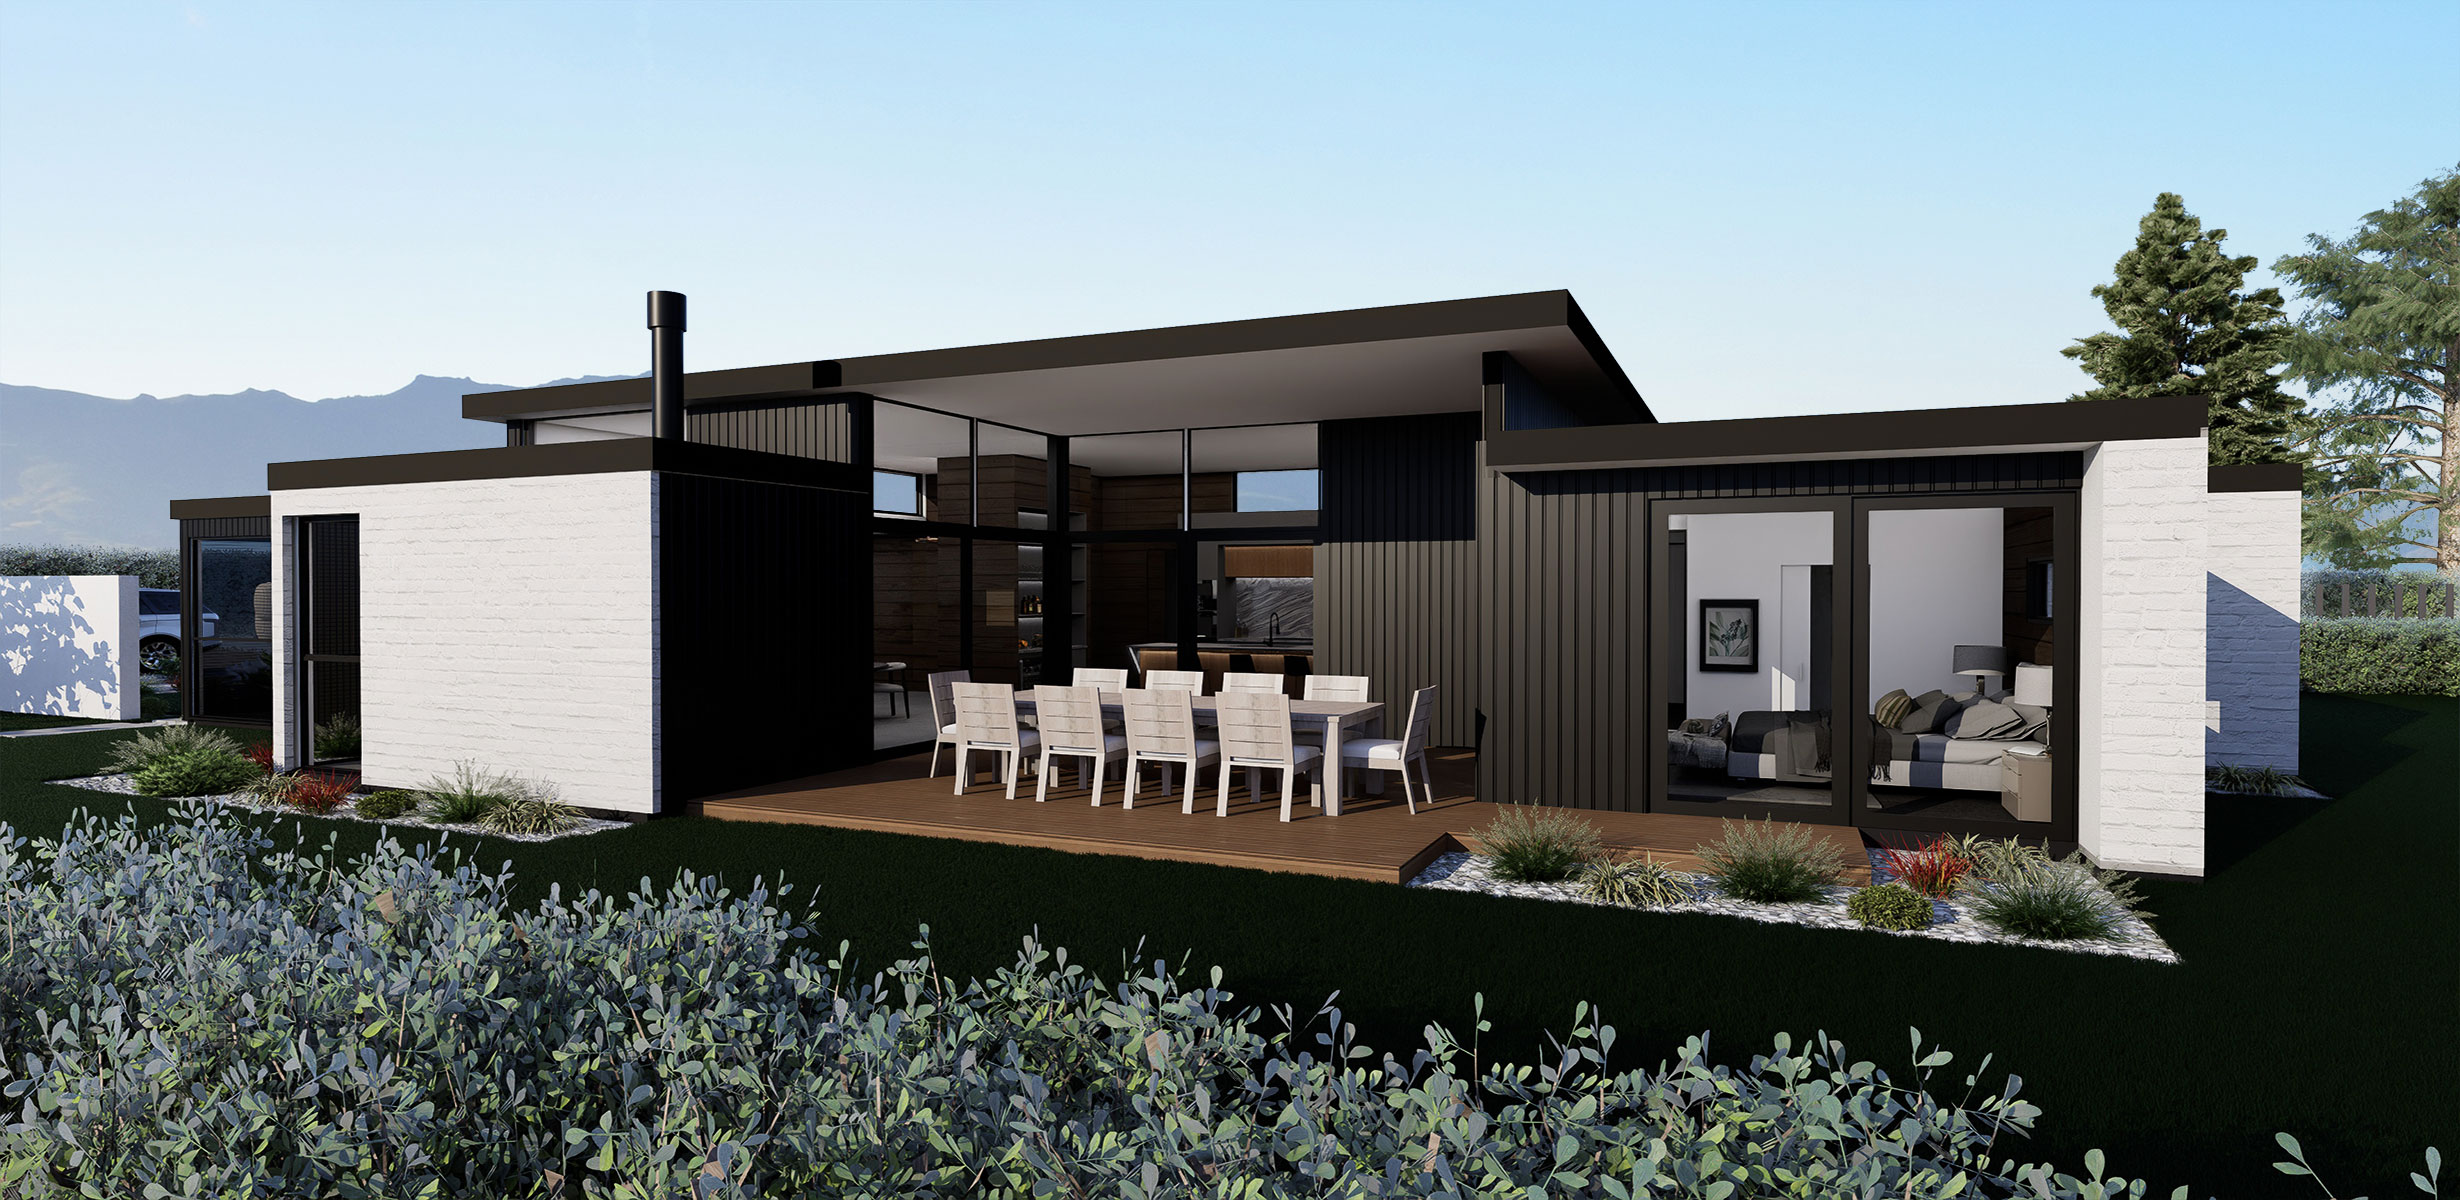 Hallmark Homes Prestige Series Cardrona Deluxe House Plan Back Rear View Christchurch Canterbury NZ.